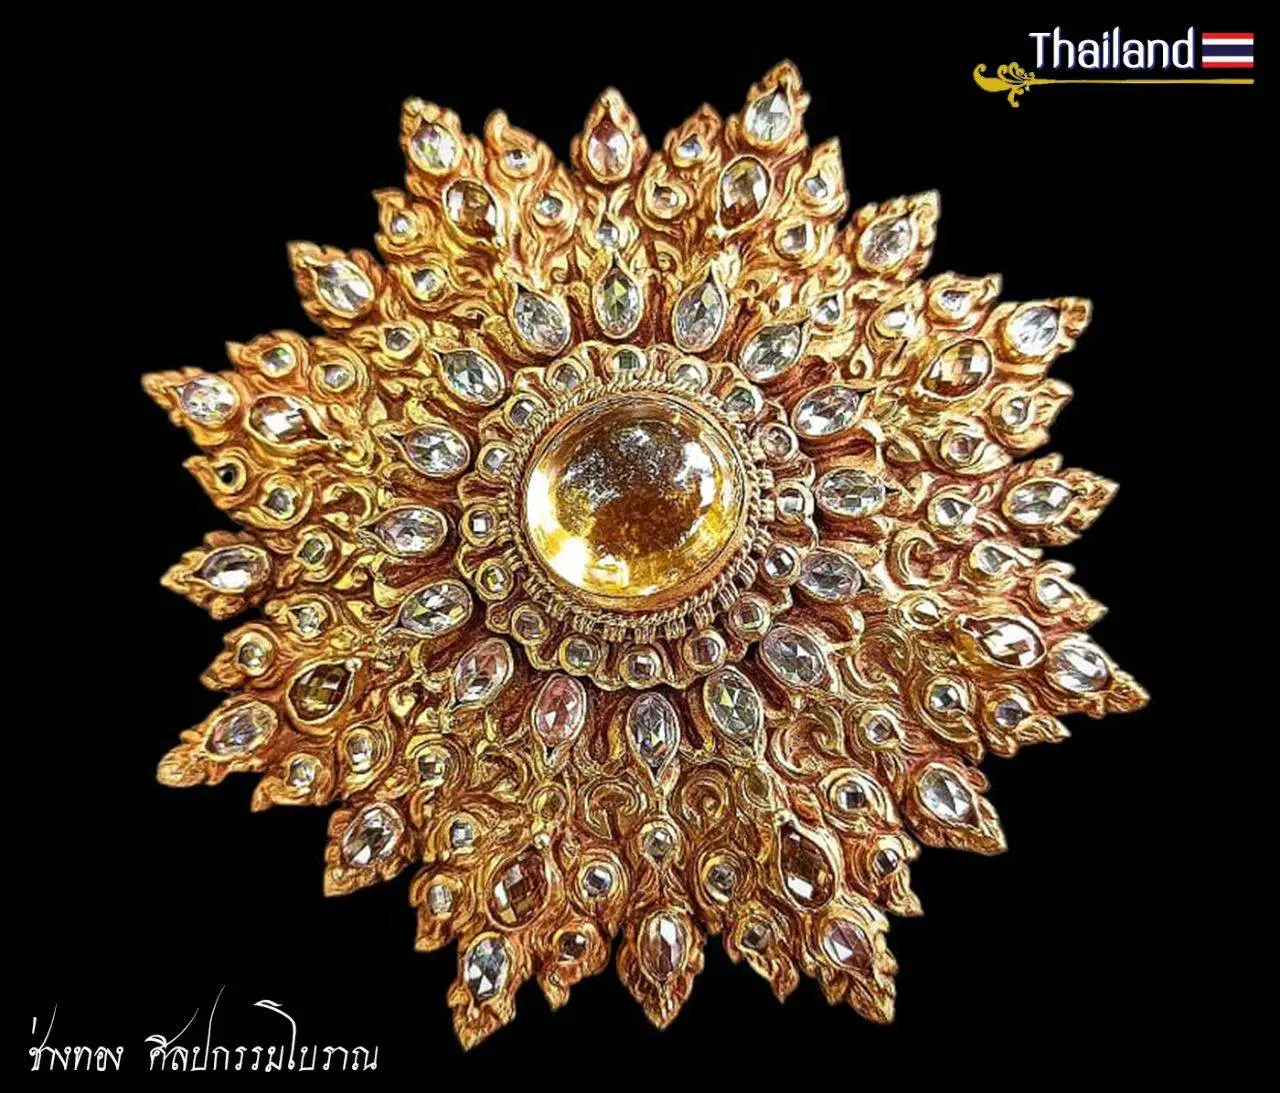 THAILAND | Ancient Thai Jewelry ♦